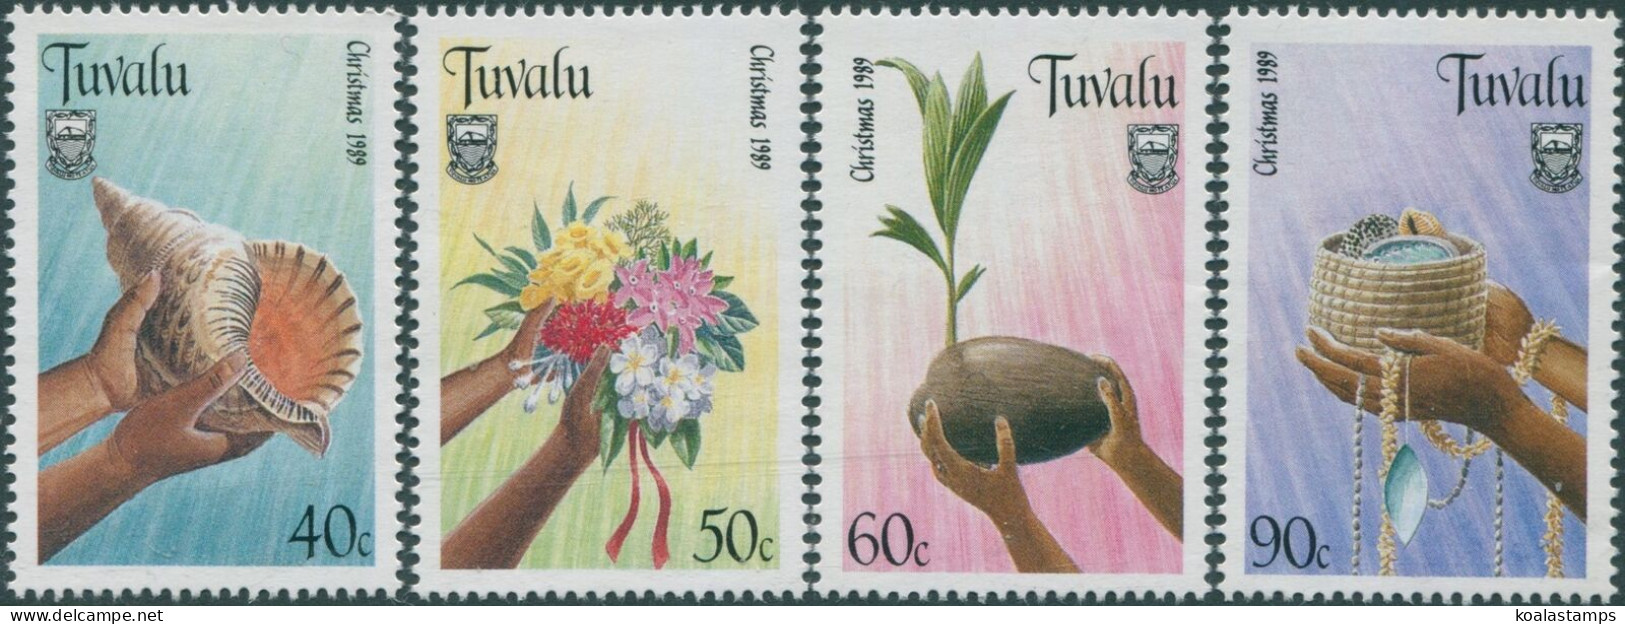 Tuvalu 1989 SG564-567 Christmas Set MNH - Tuvalu (fr. Elliceinseln)